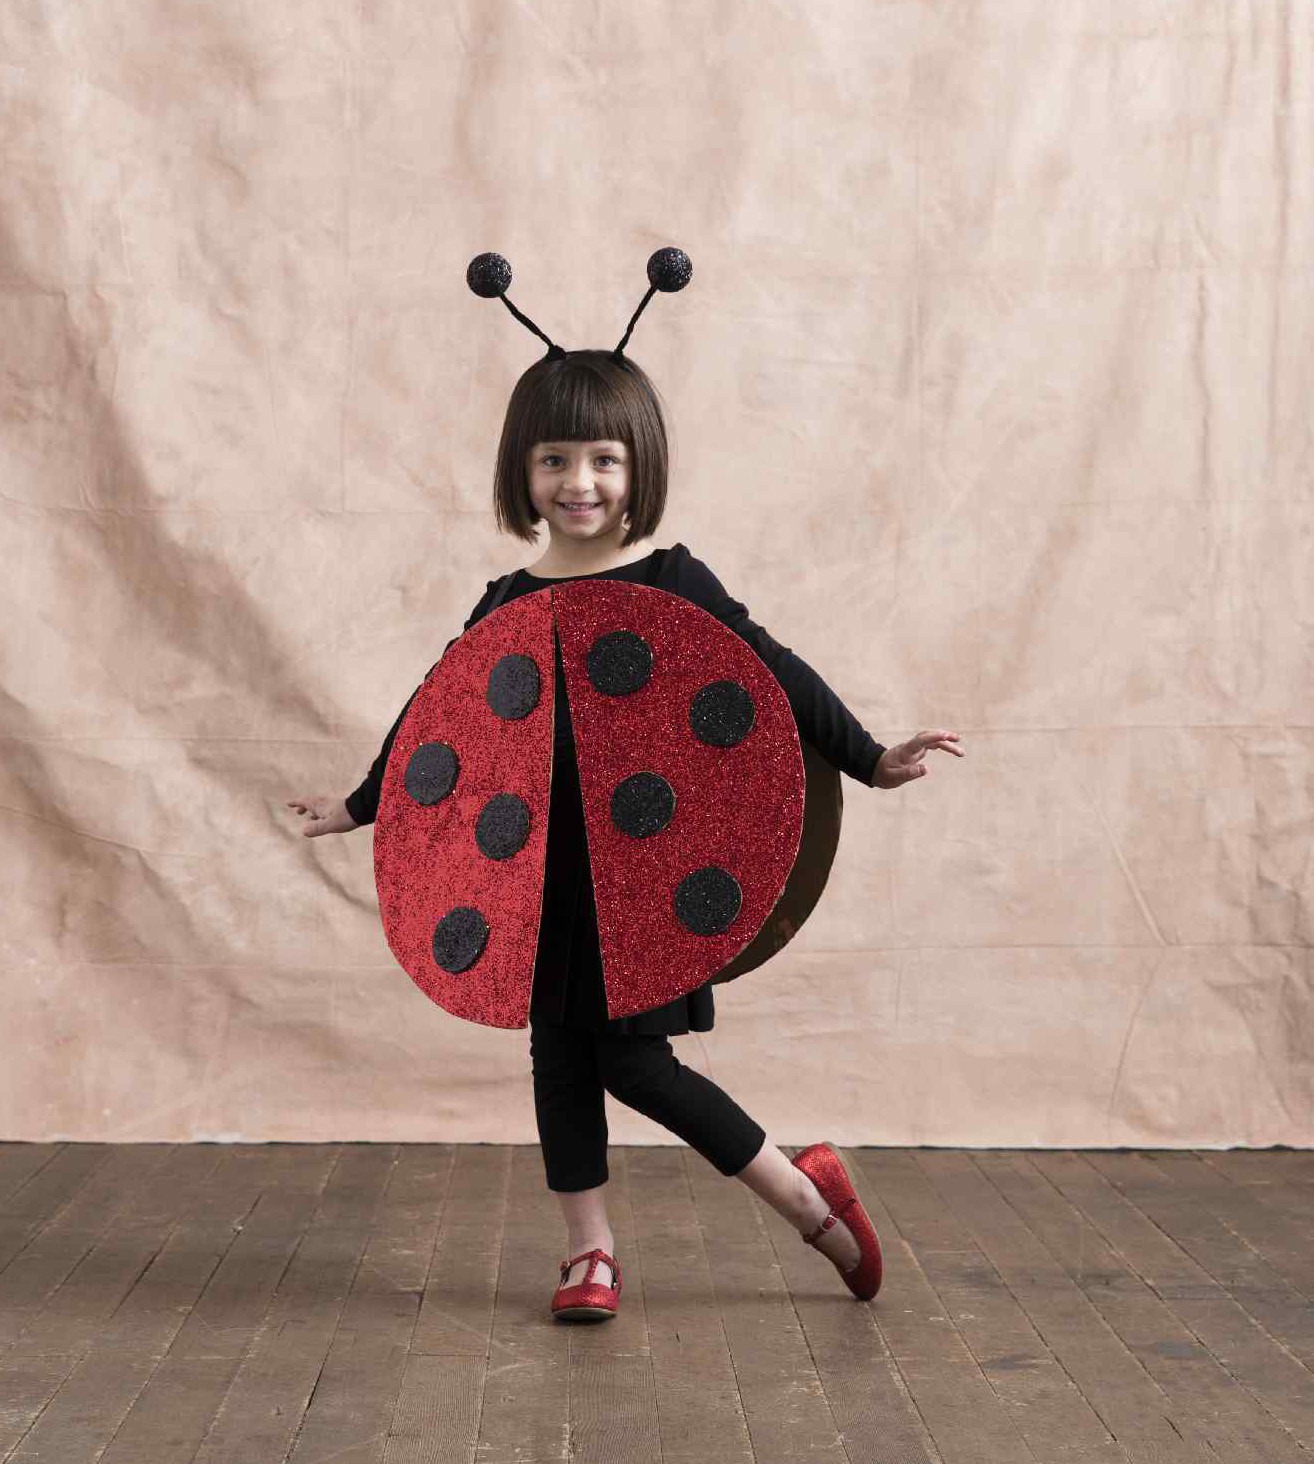 Best ideas about Ladybug Costume DIY
. Save or Pin DIY Ladybug Costume Now.